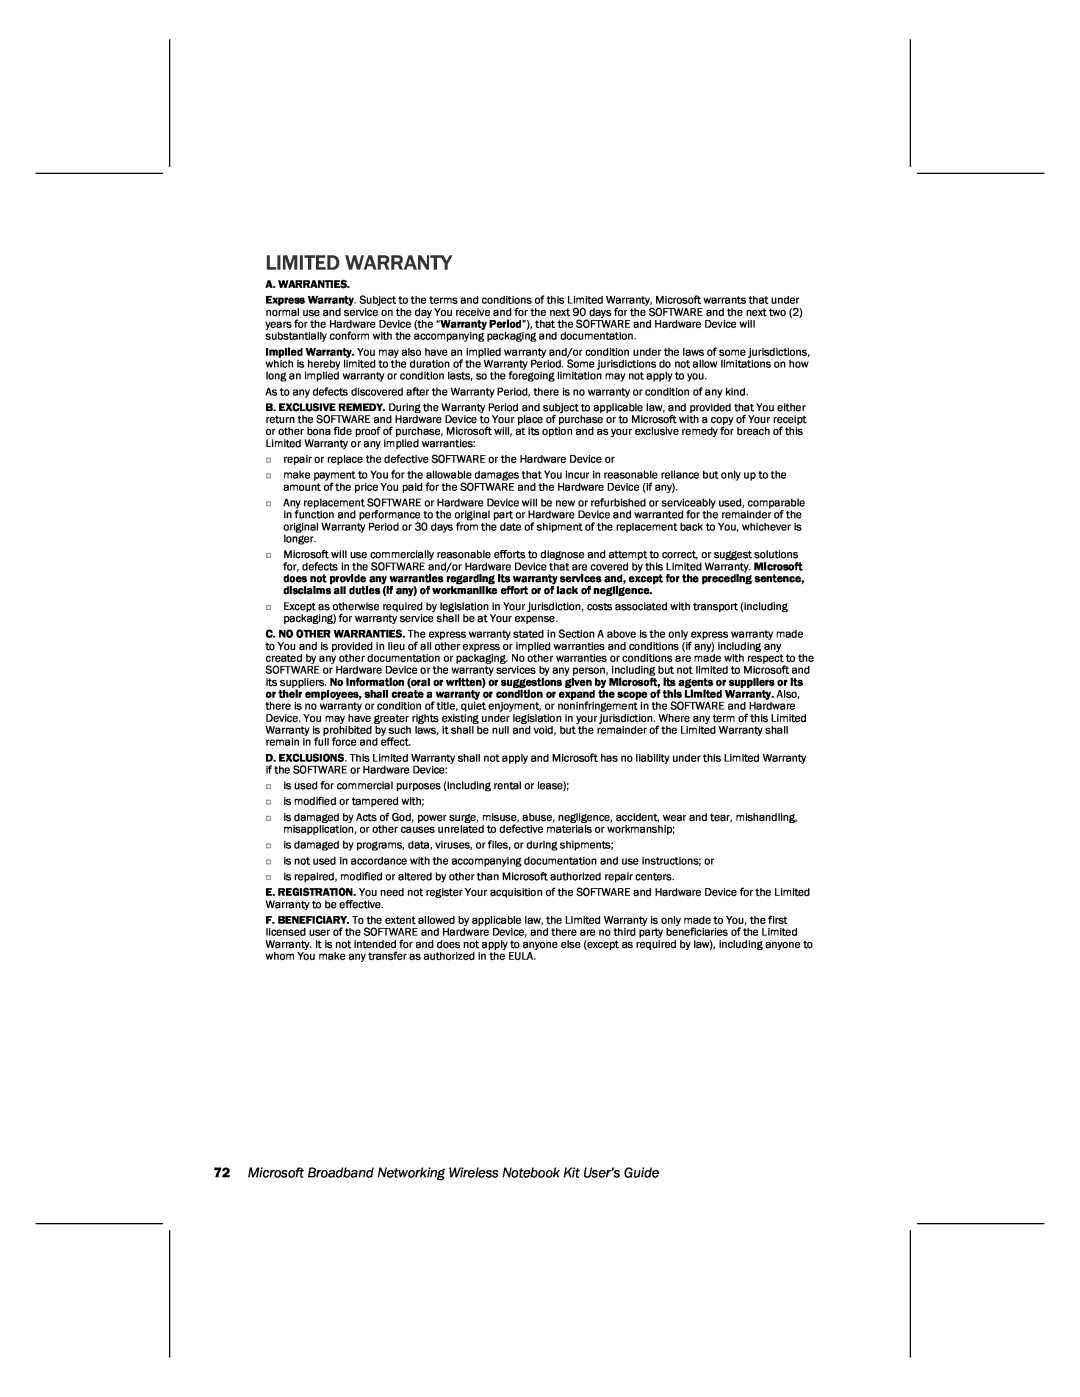 Microsoft MN-820 manual Limited Warranty, Microsoft Broadband Networking Wireless Notebook Kit User’s Guide 